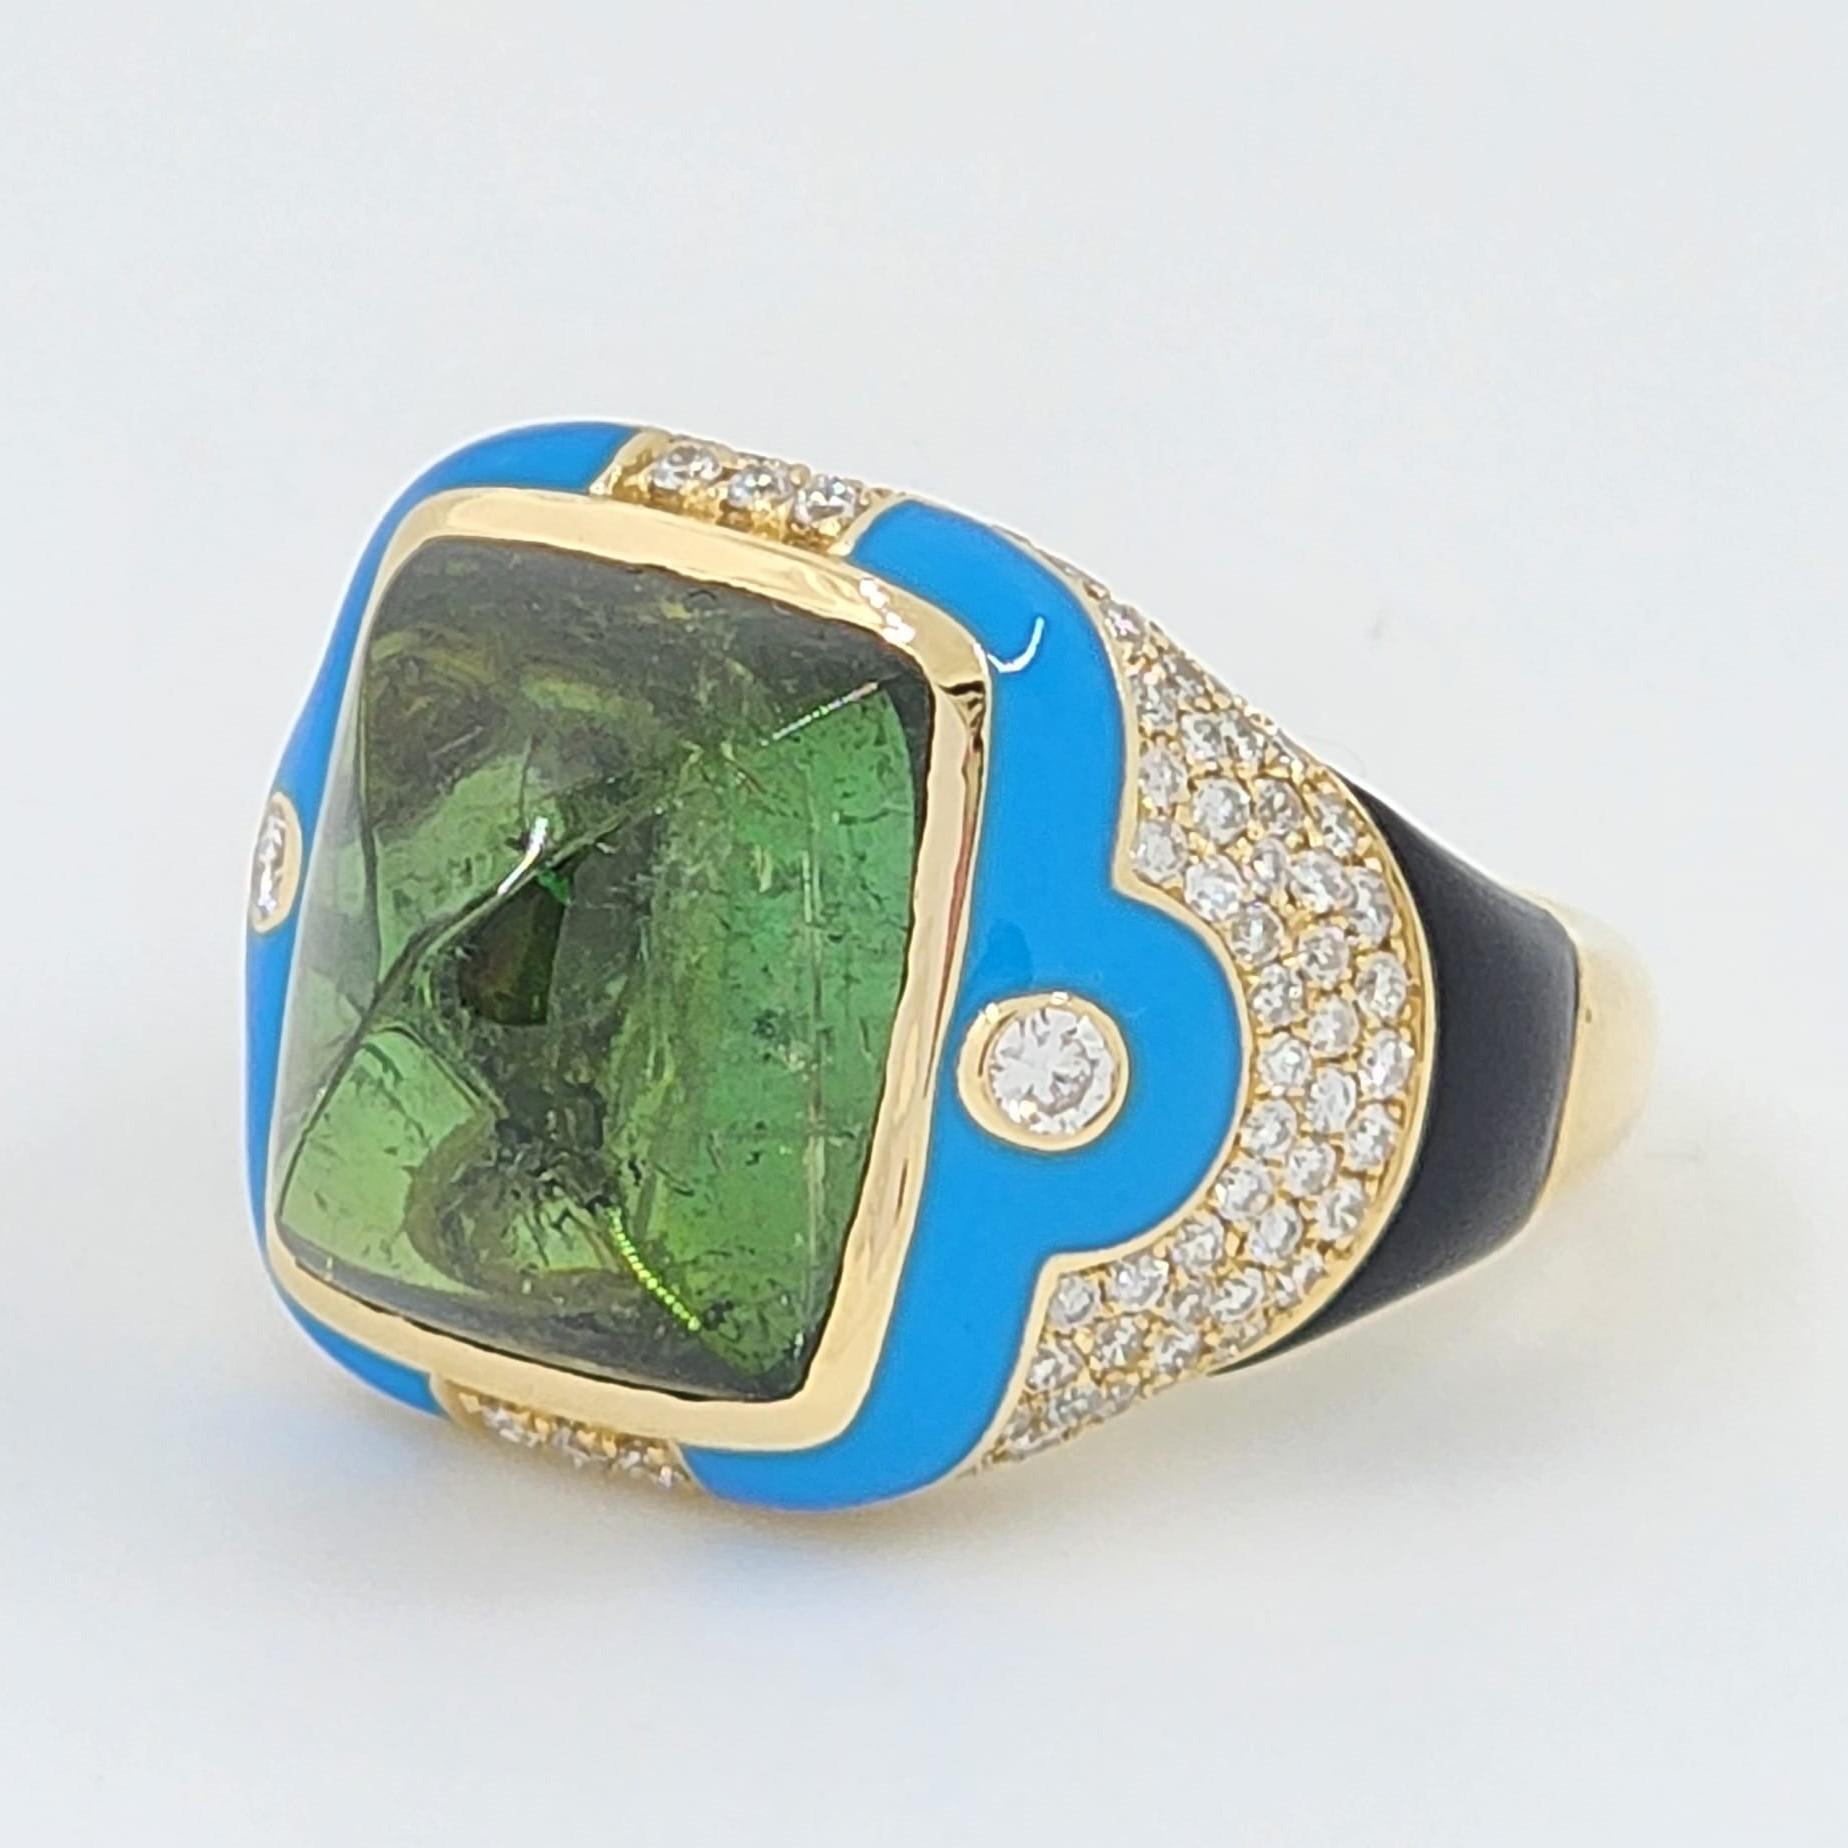 Art Deco 9.79ct Sugarloaf Cabochon Tourmaline Onyx Diamond Enamel Cocktail Ring 18k Gold